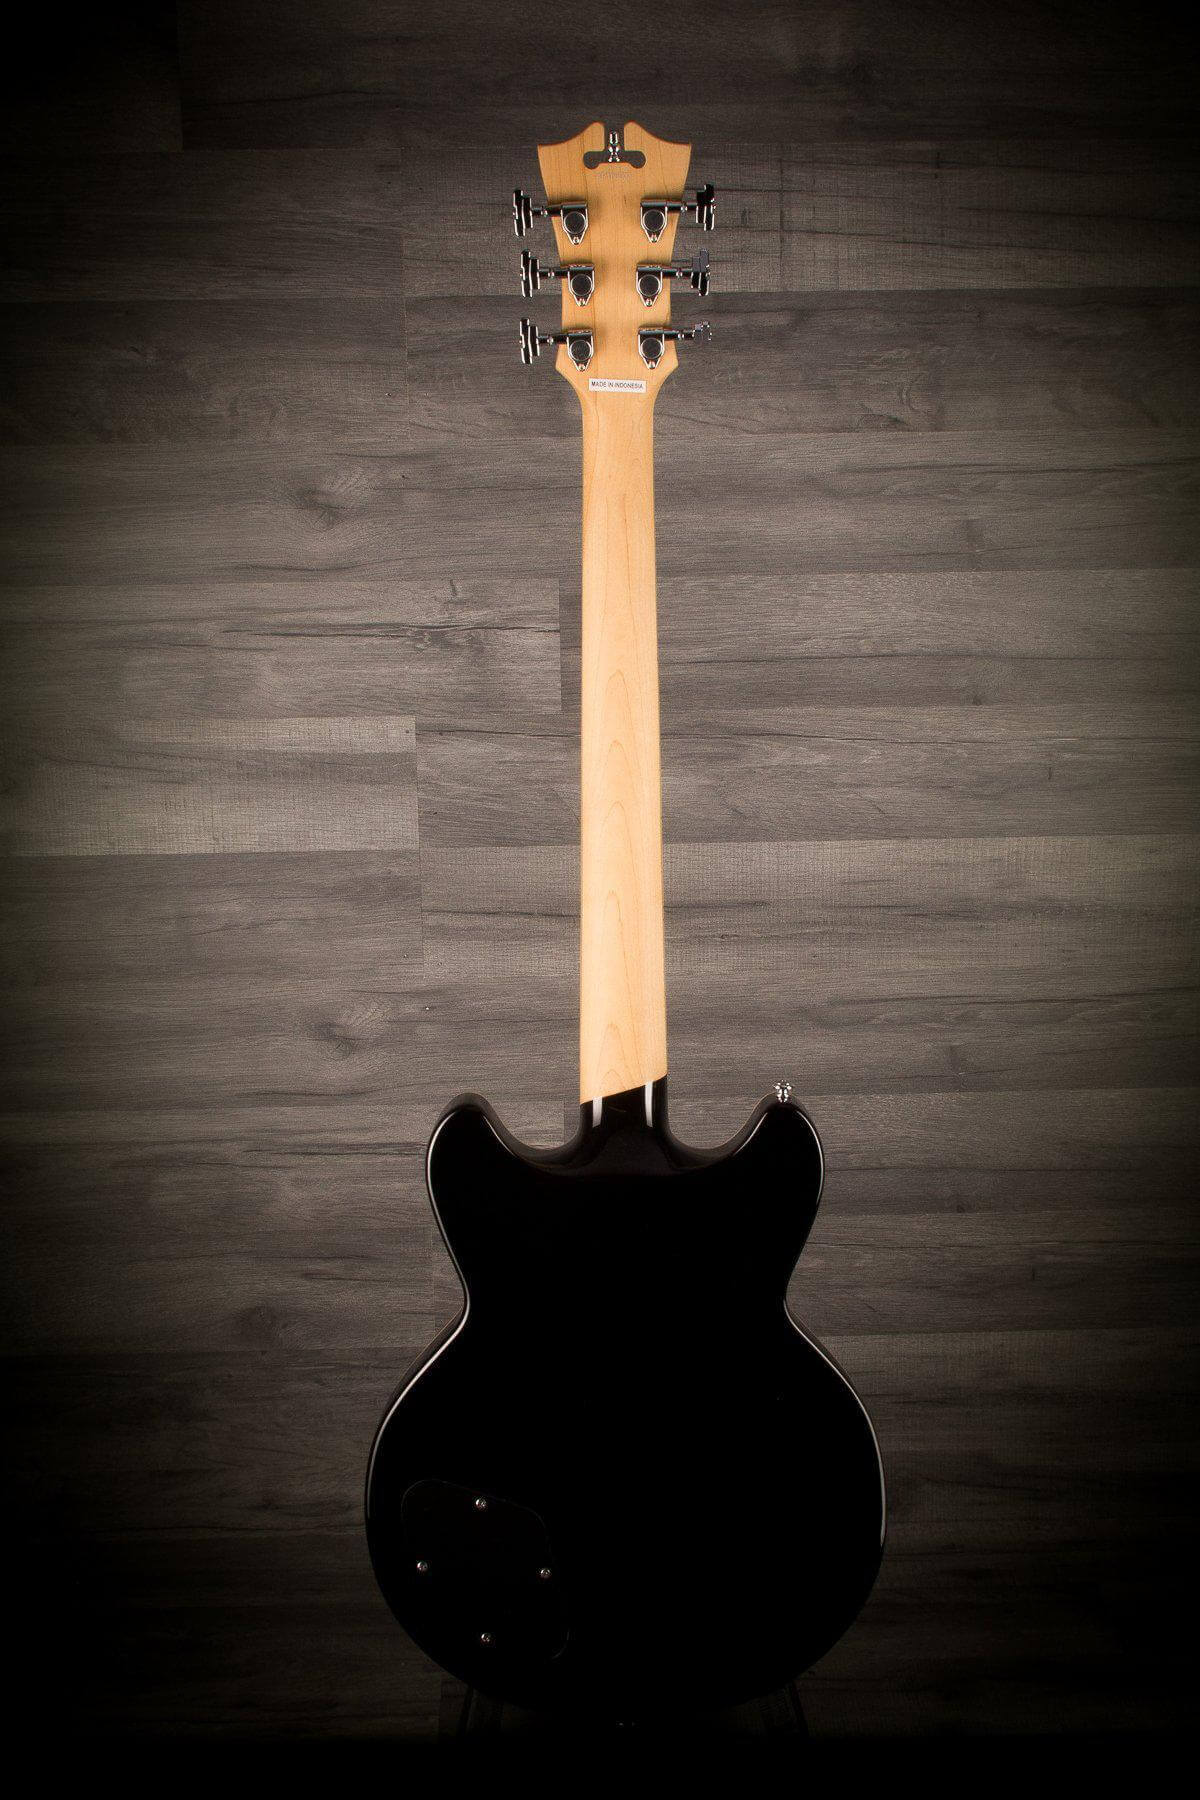 D'Angelico Electric Guitar D'Angelico Premier Brighton - Black